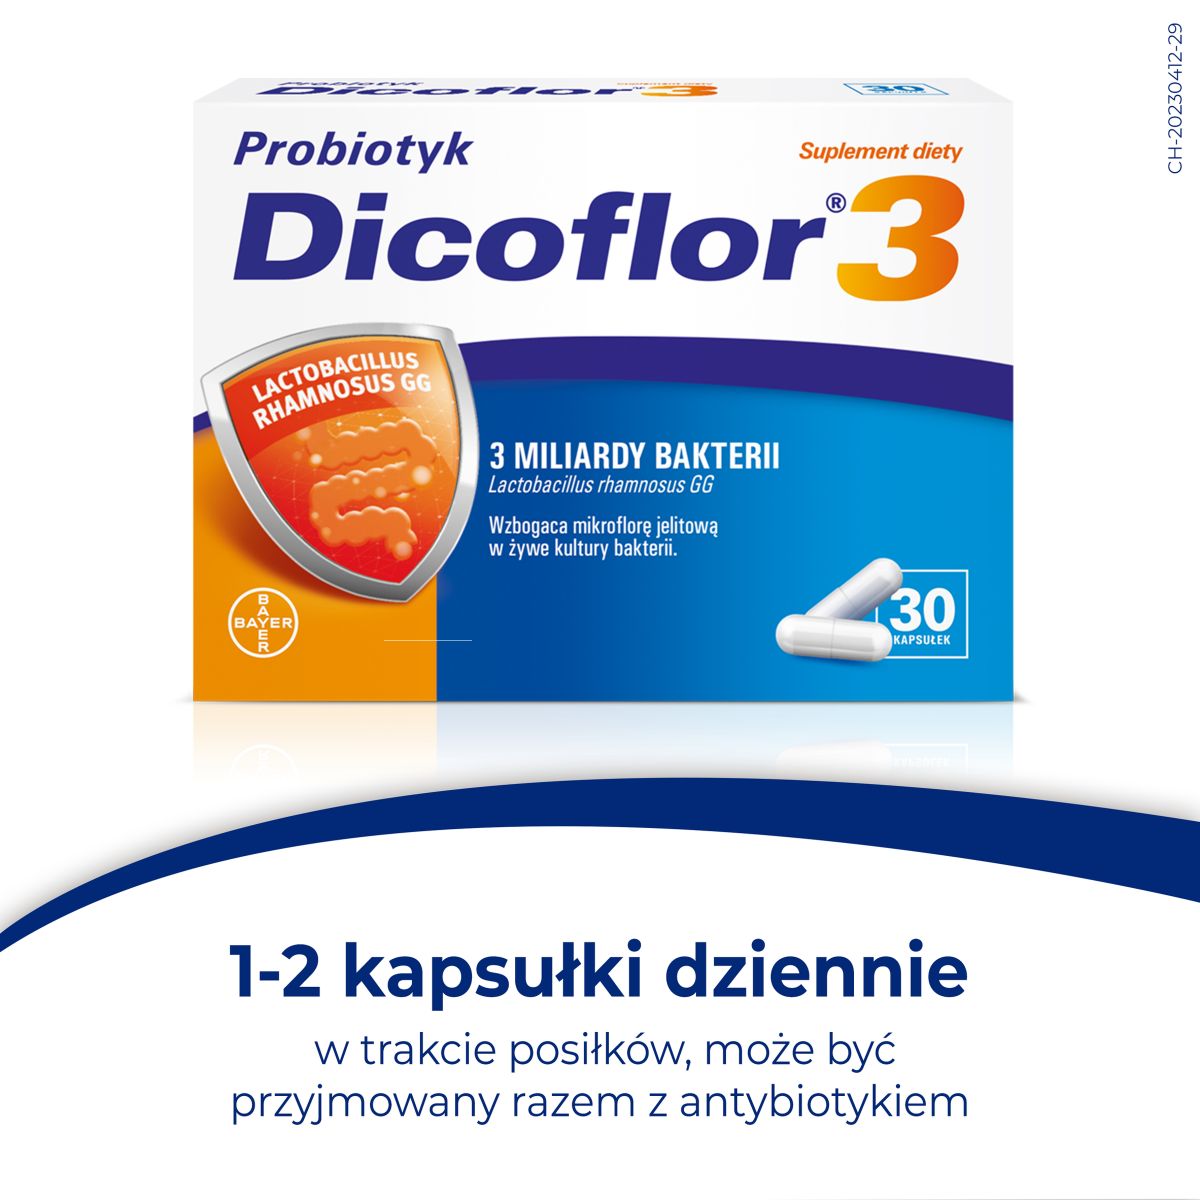 Dicoflor 3 probiotyk  30 kapsułek.